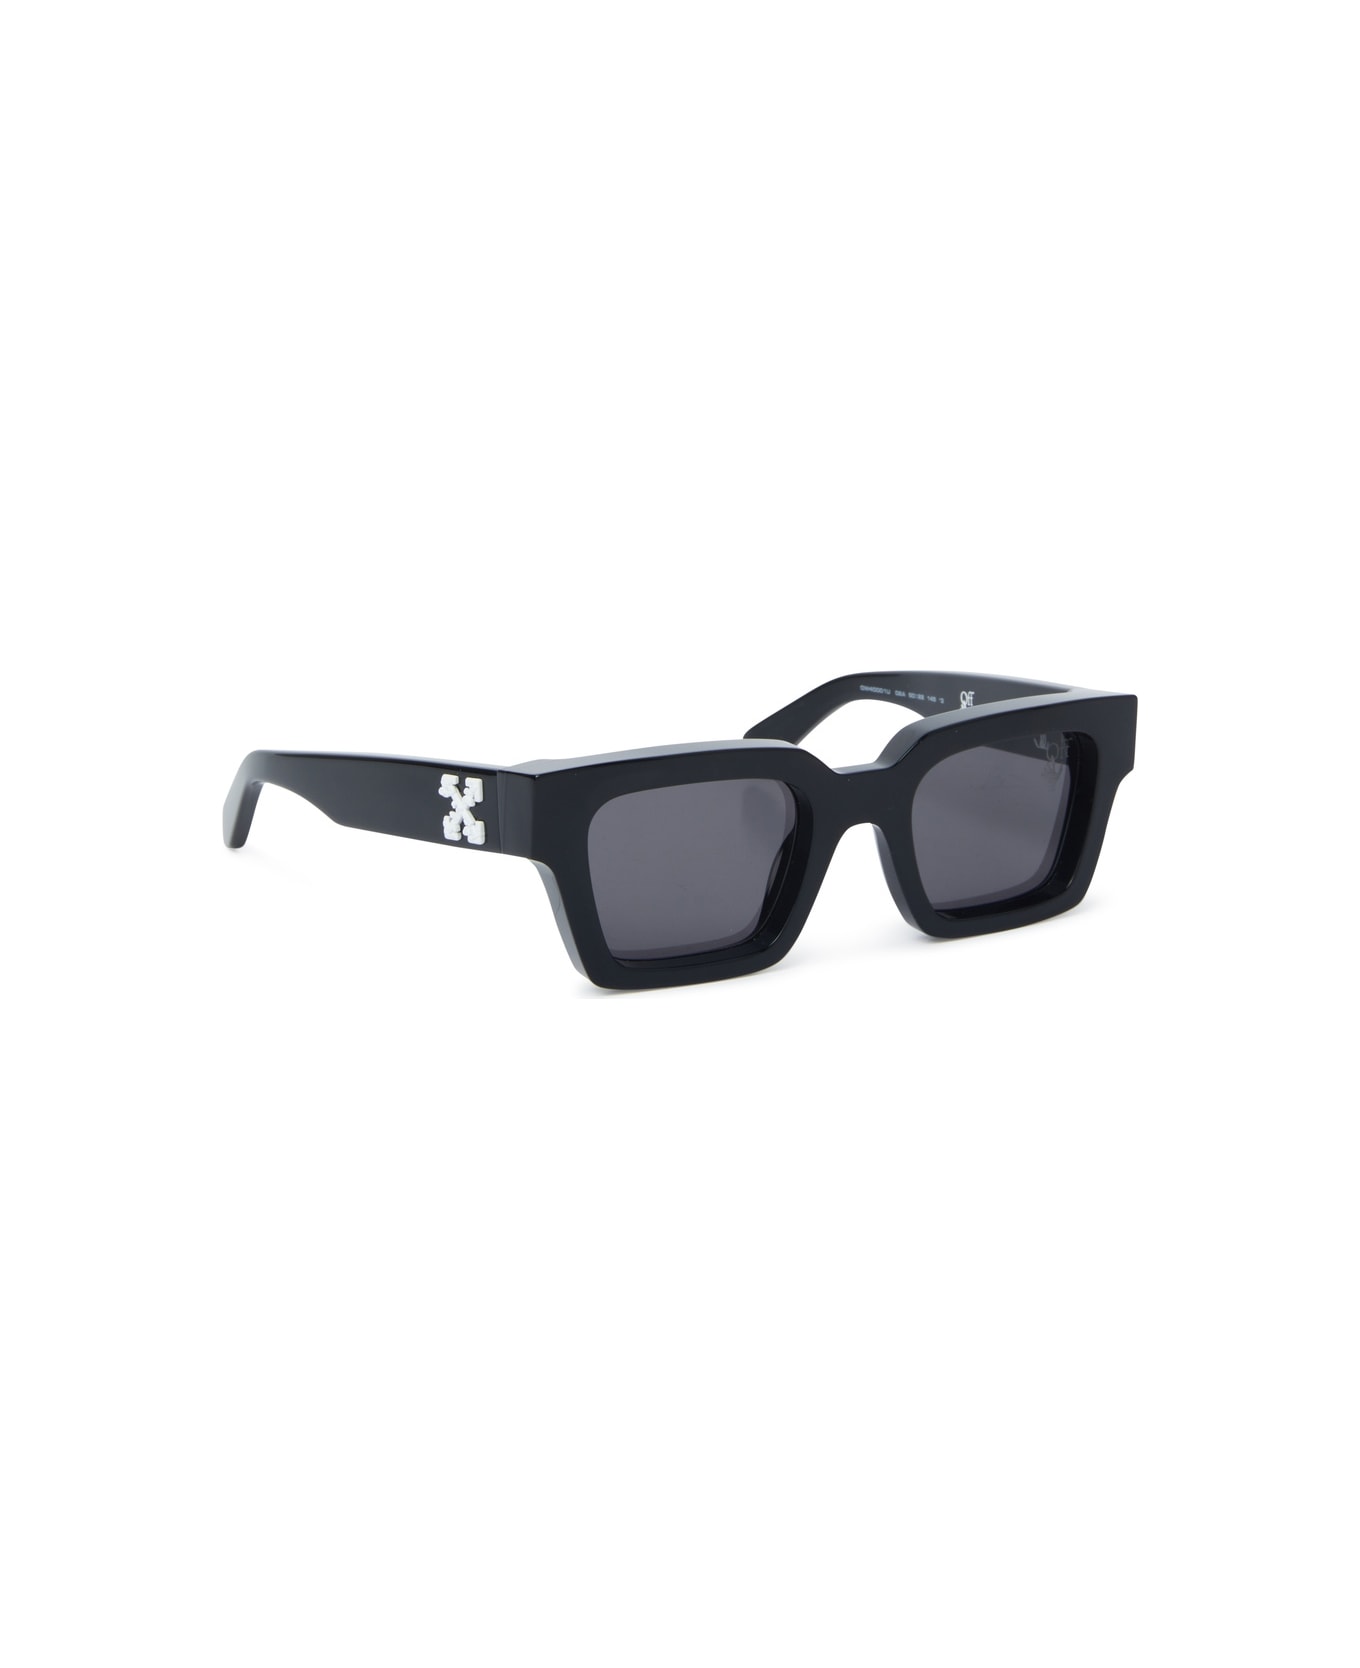 Off-White VIRGIL SUNGLASSES Sunglasses - Black Dark Grey